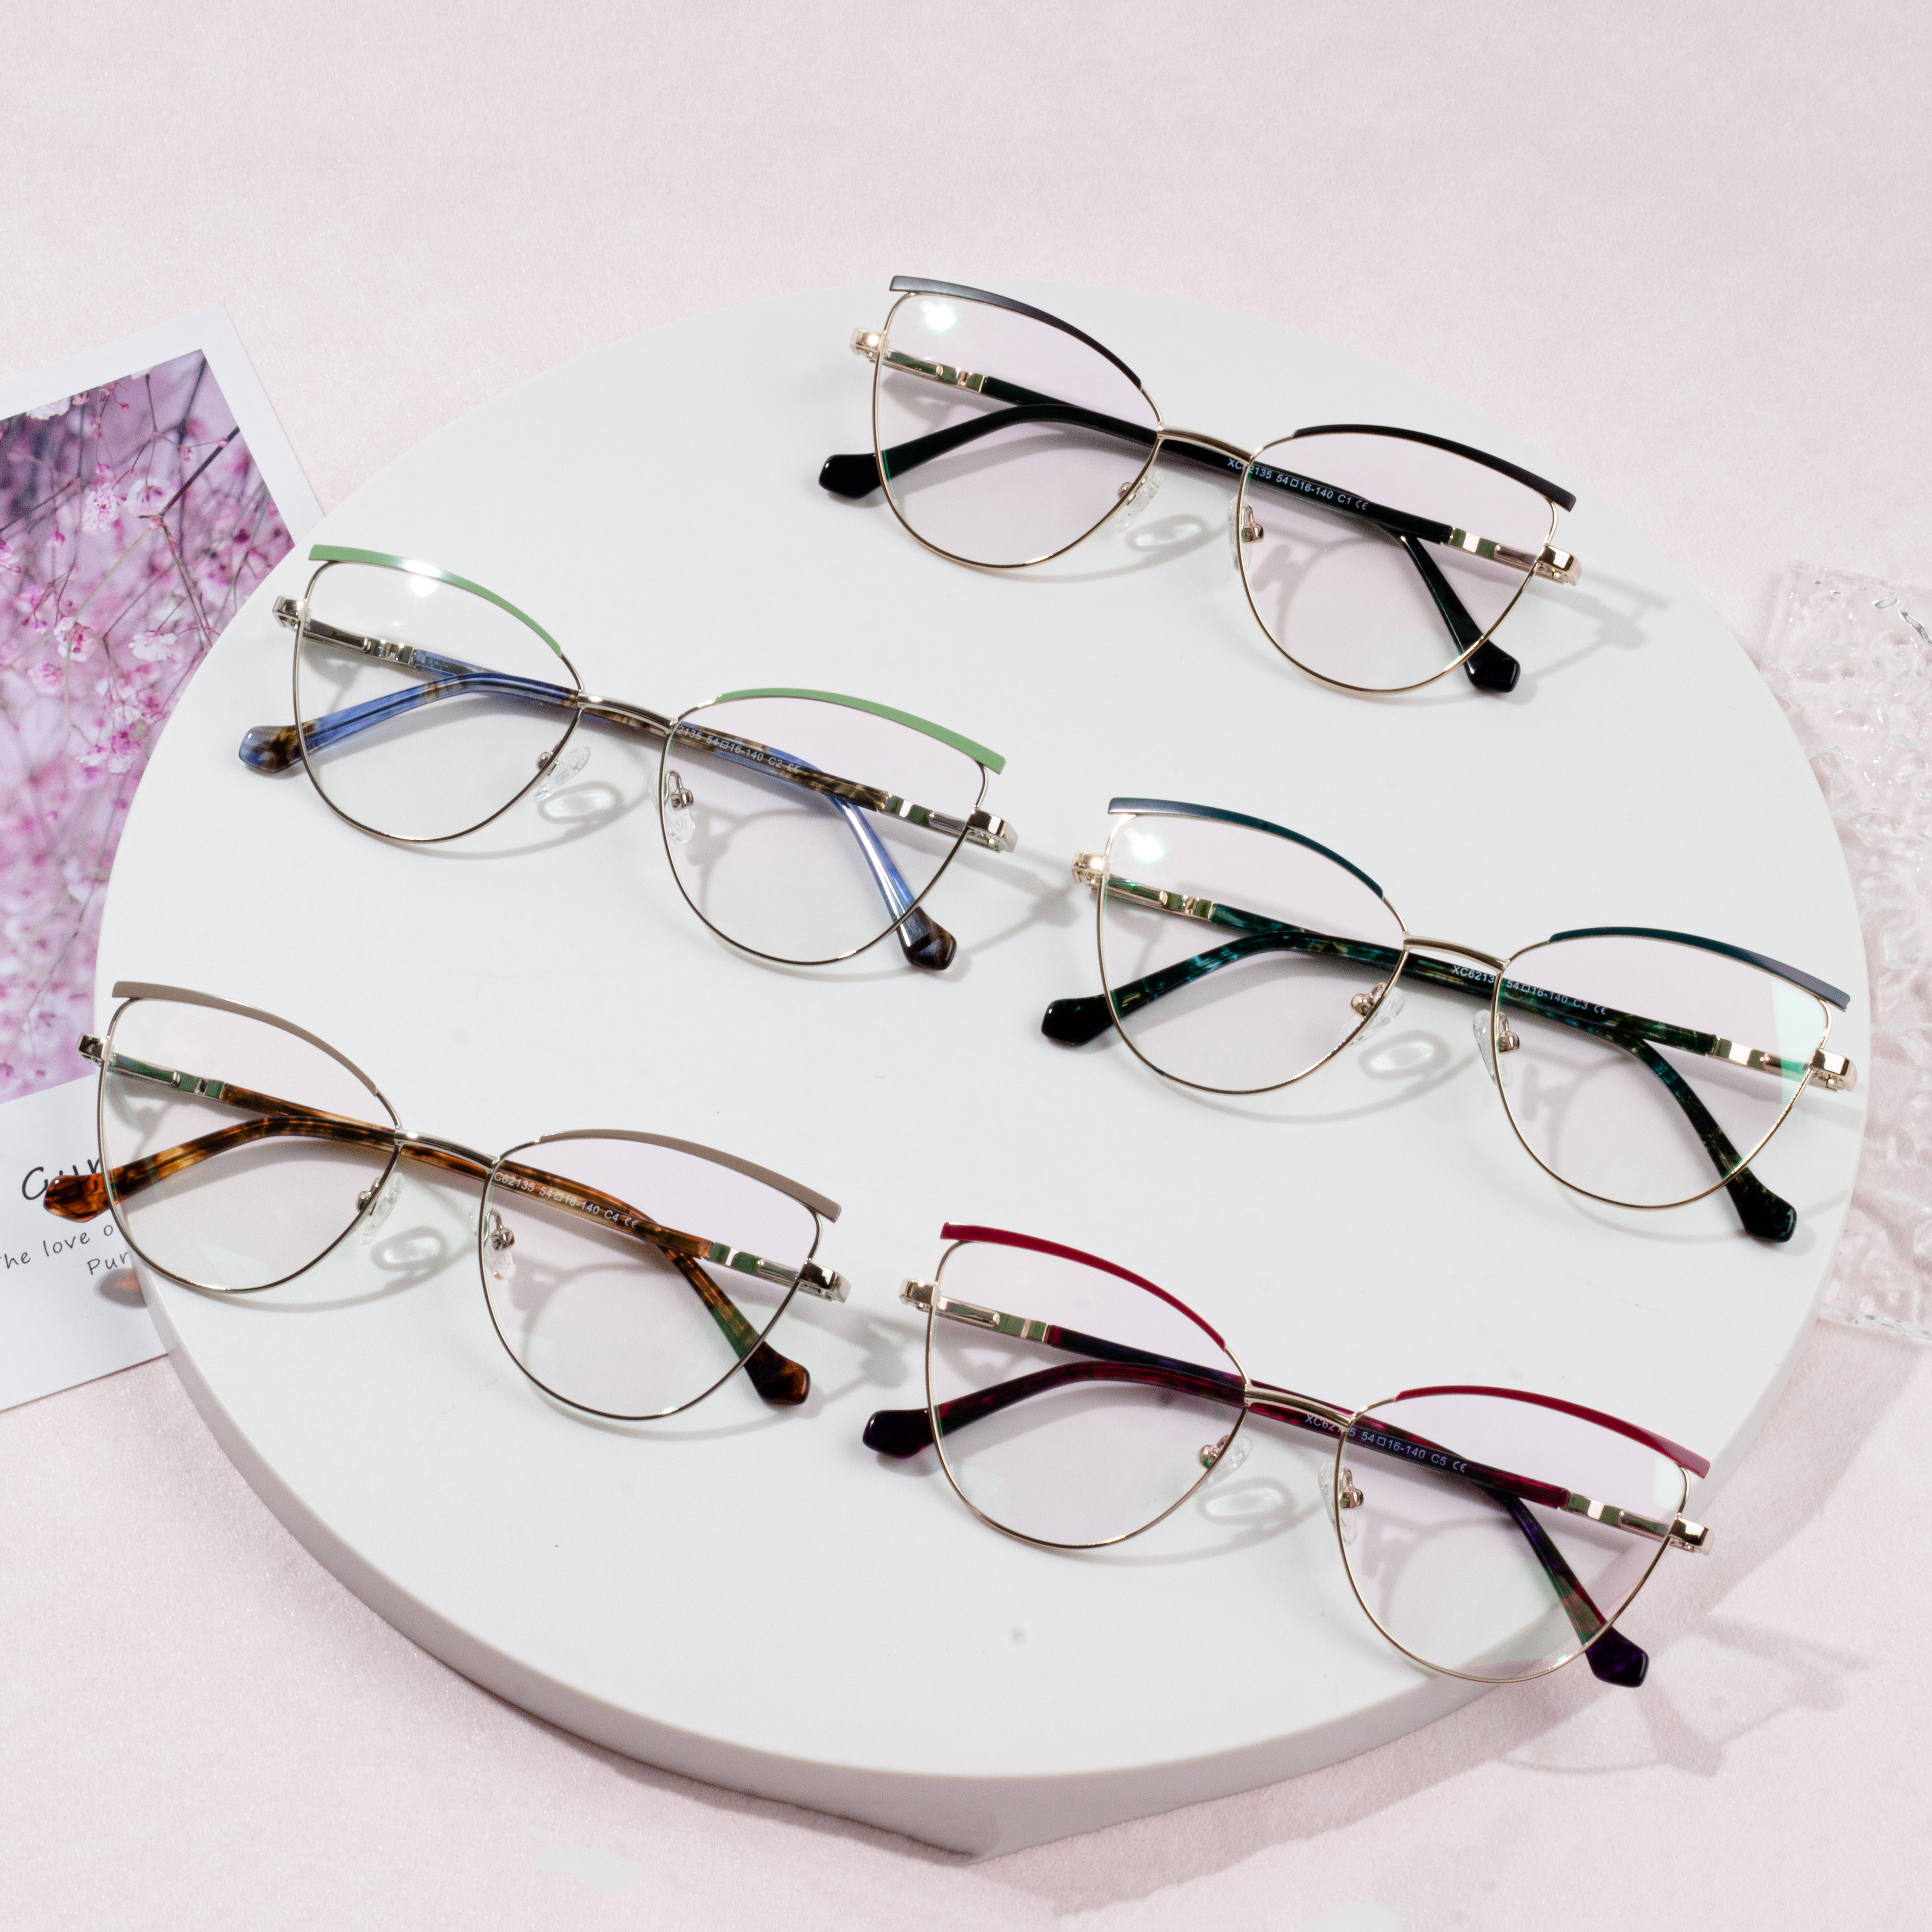 eyeglass frame size